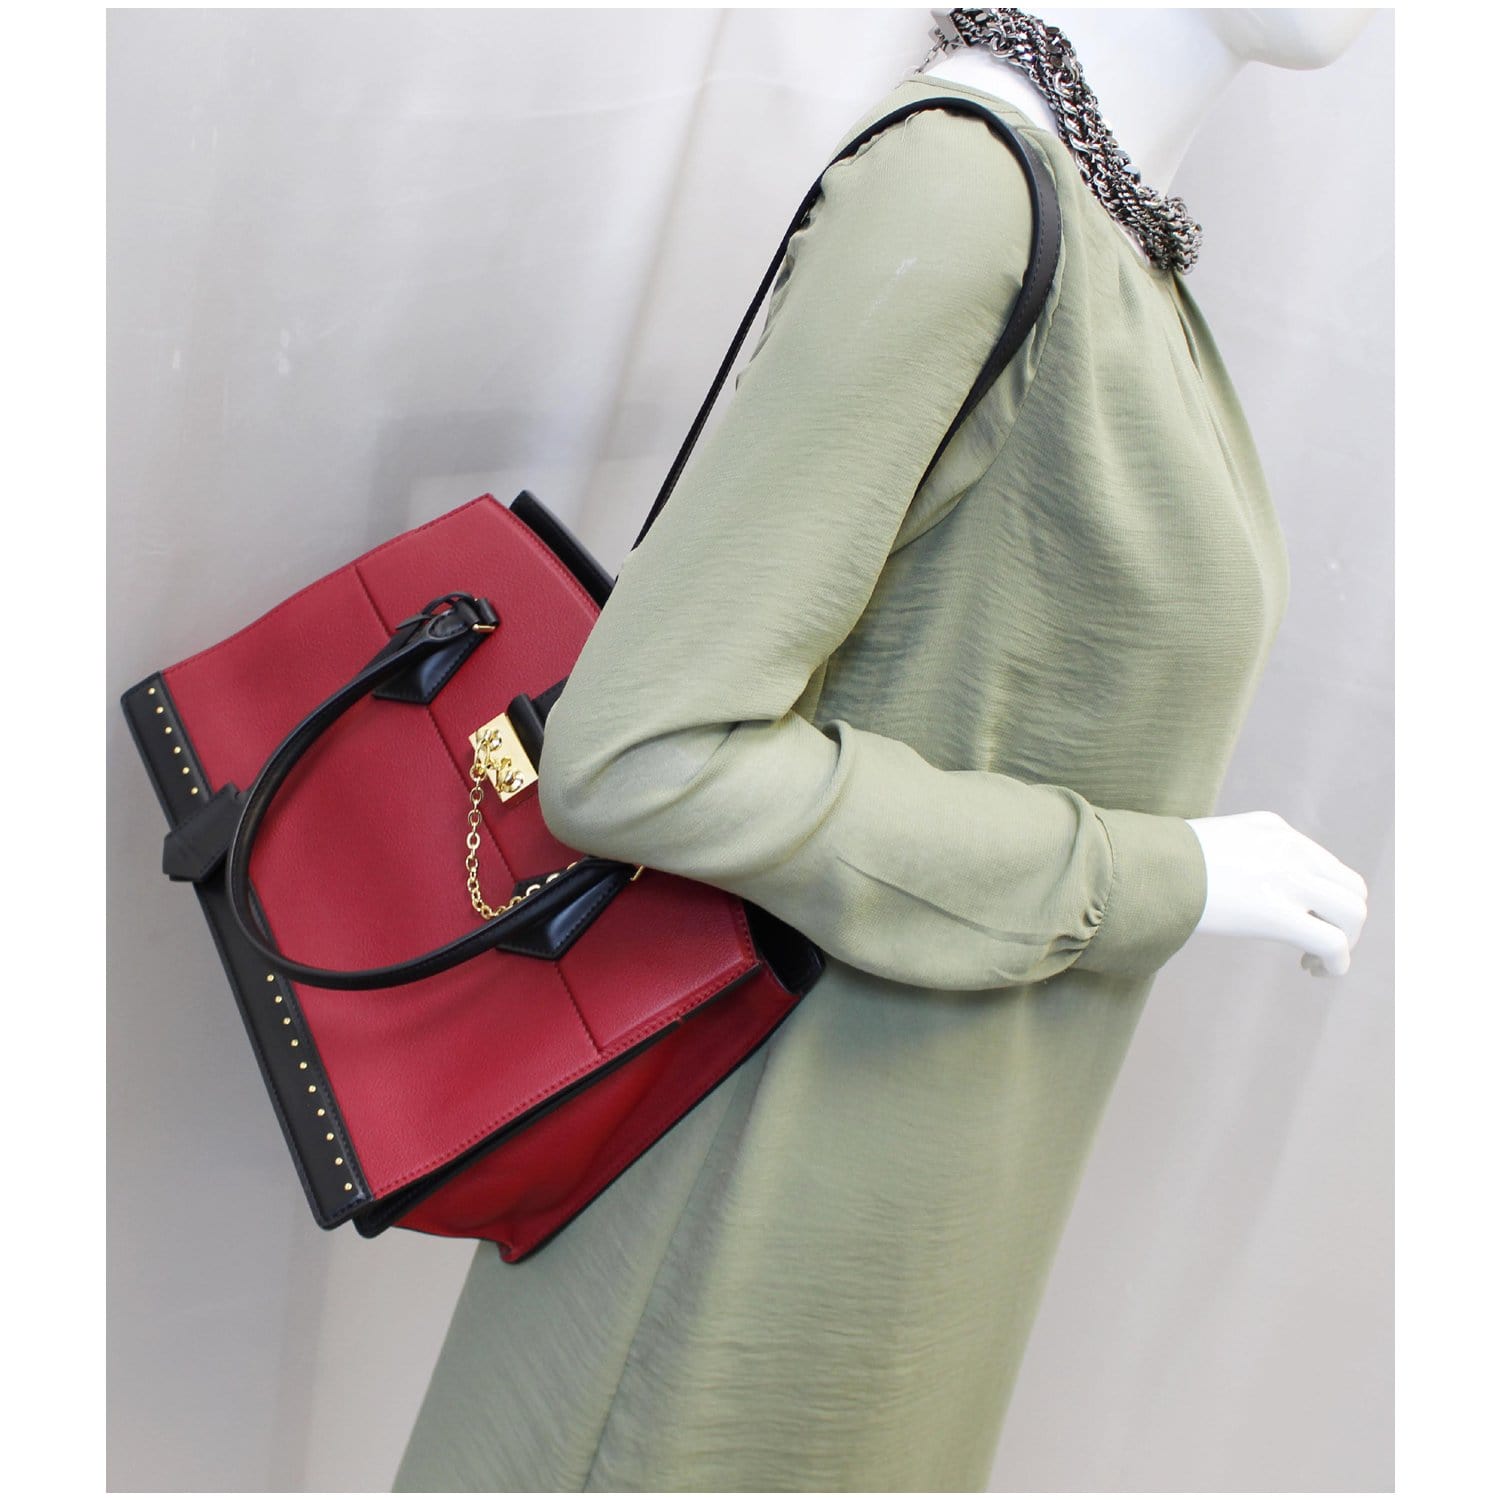 Miniature Louis Vuitton Bag [IBM B001]